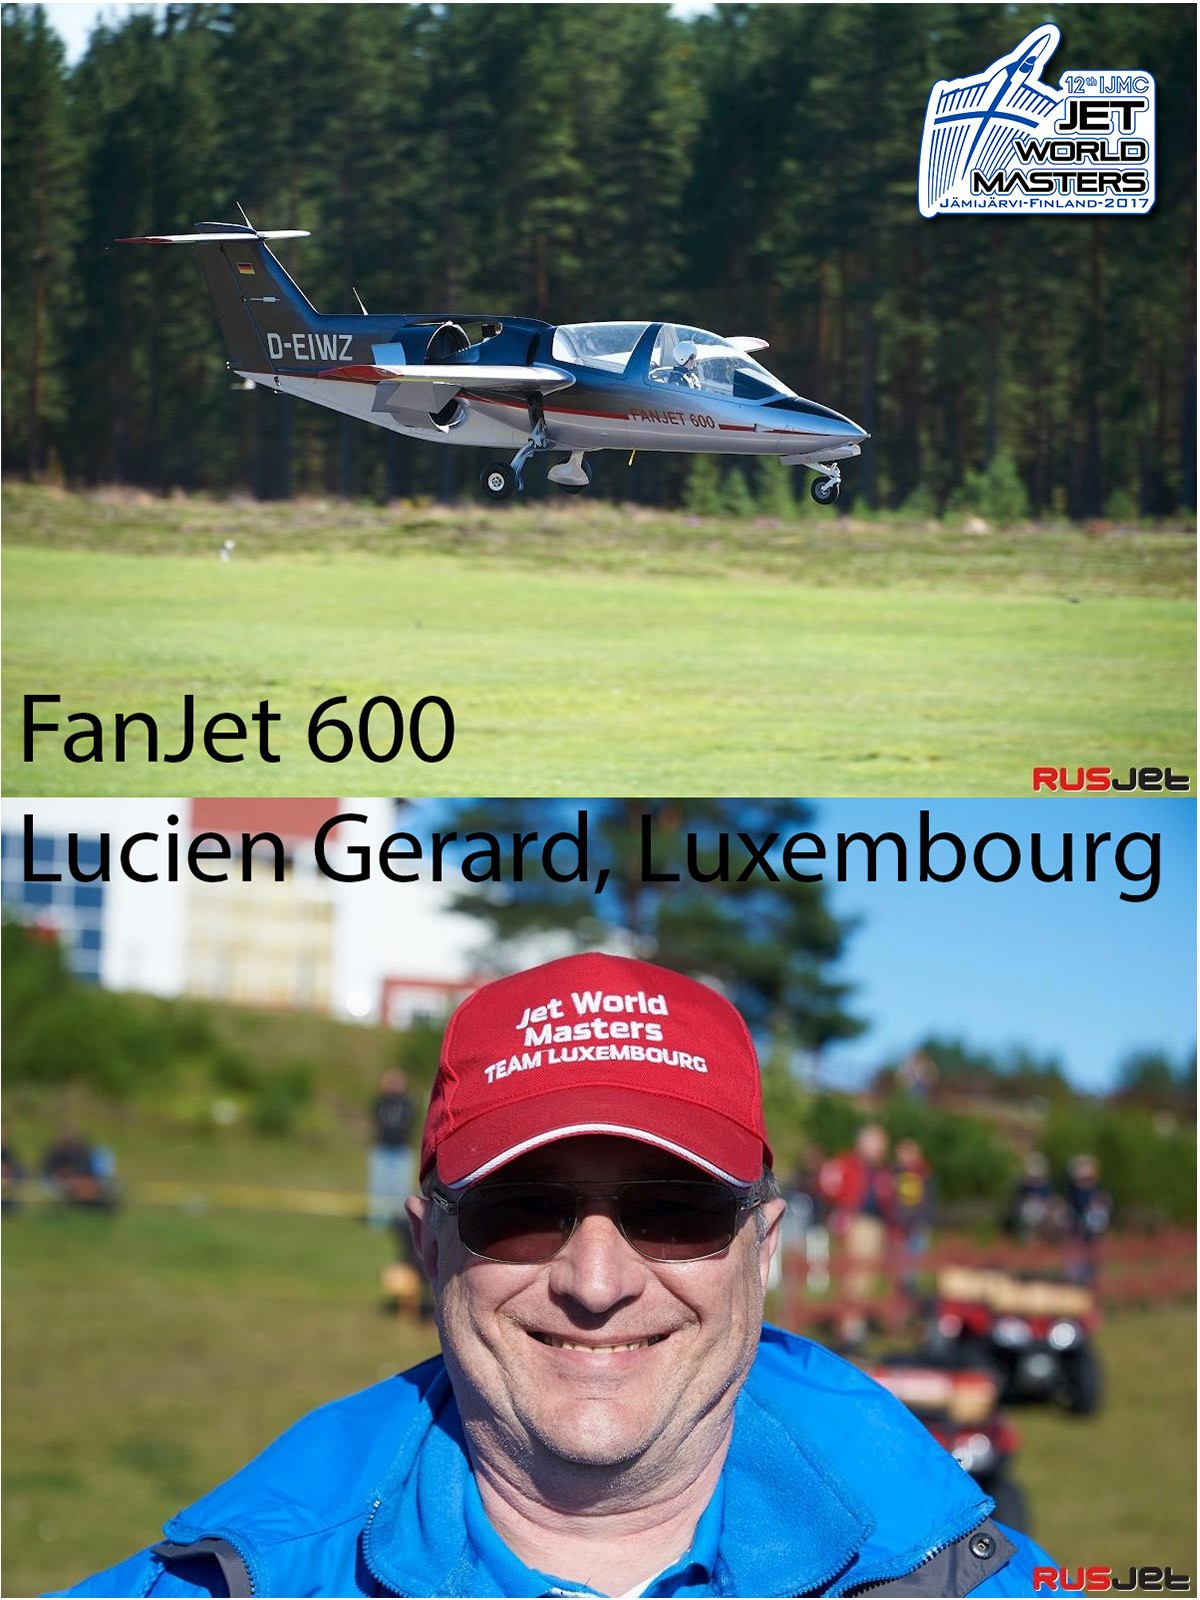 Luxembourg Lucien Gerard .jpg(304 KB)